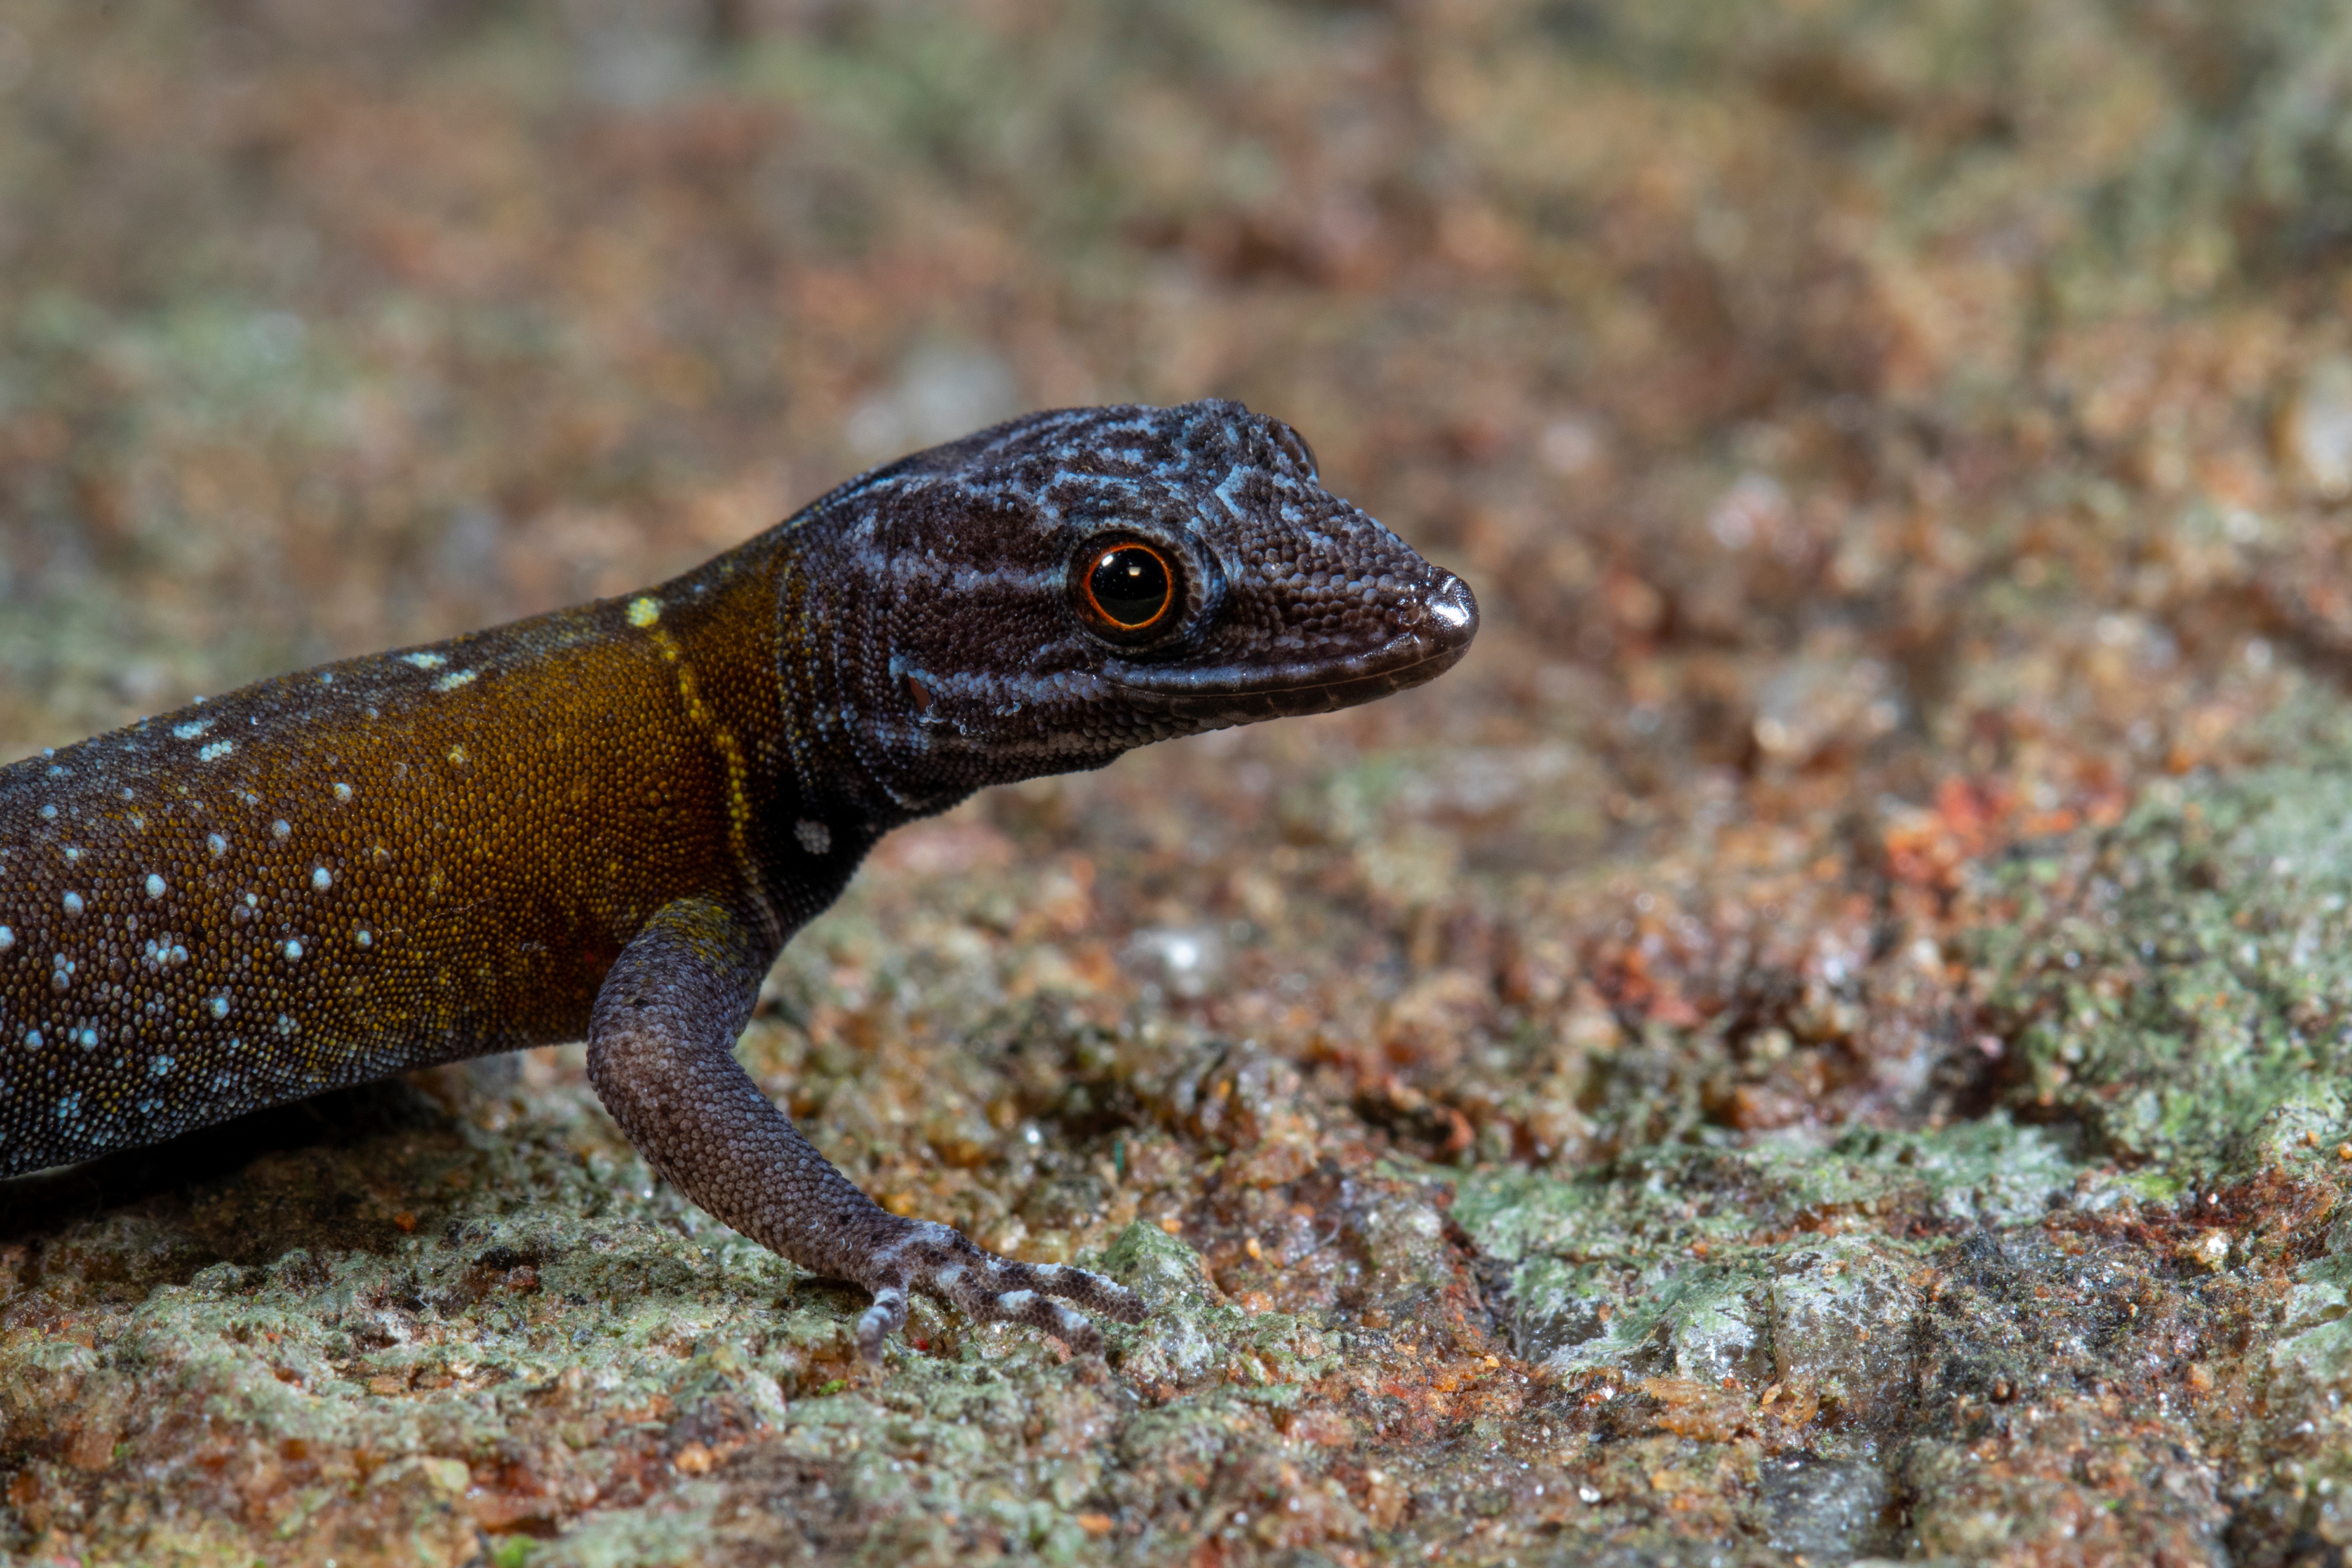 Close up photo of the gecko species Cnemaspis vangoghi